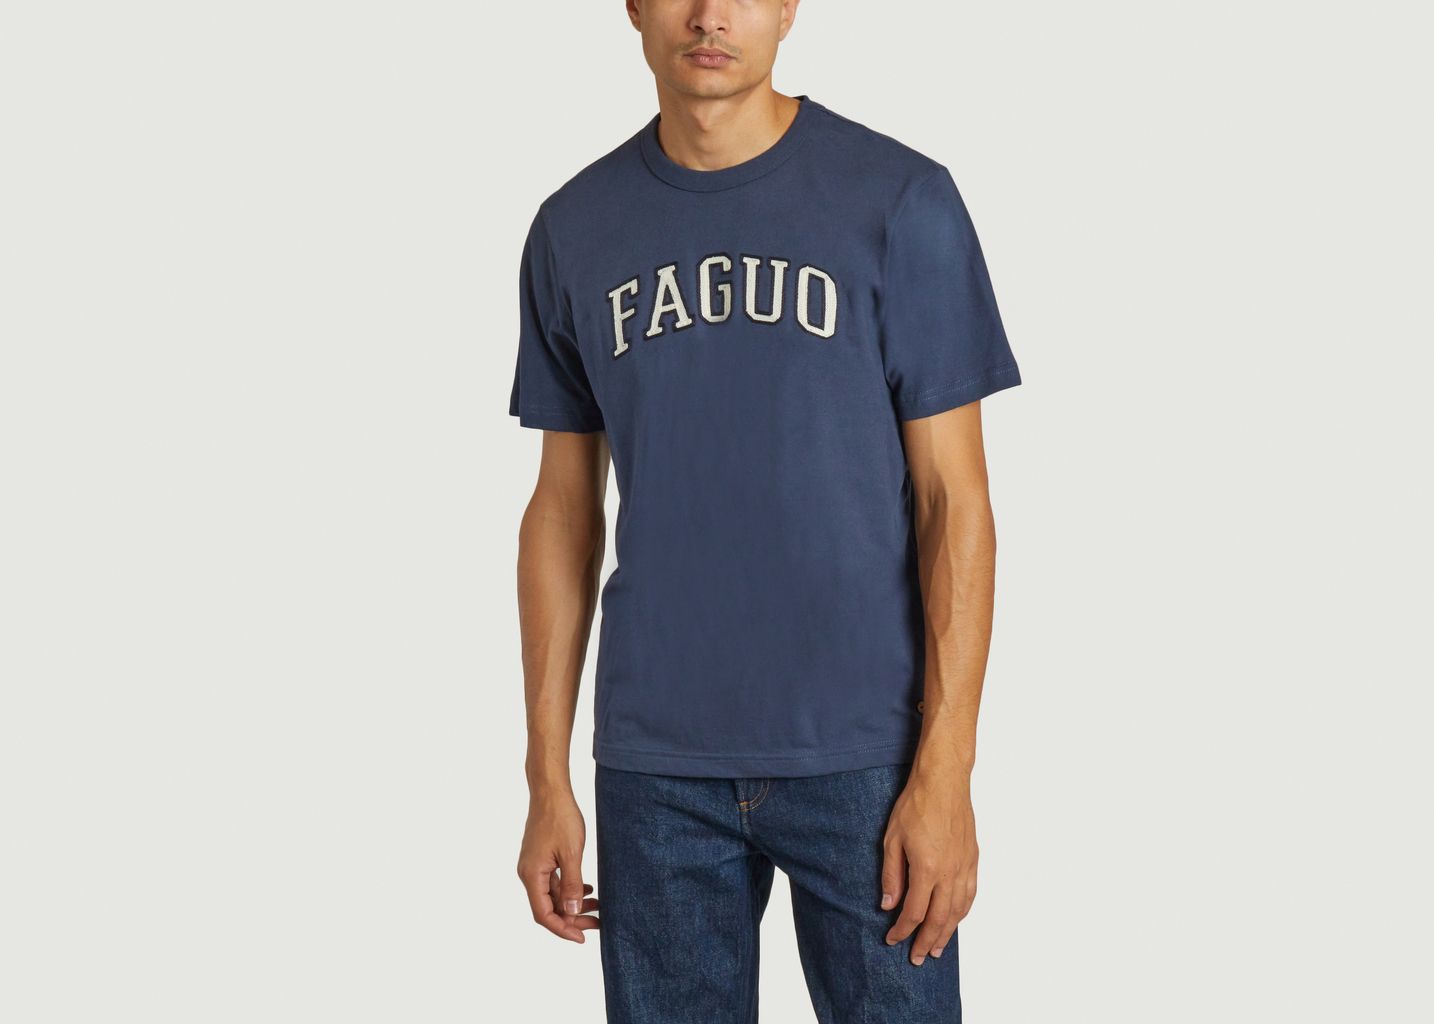 Lugny T-Shirt - Faguo